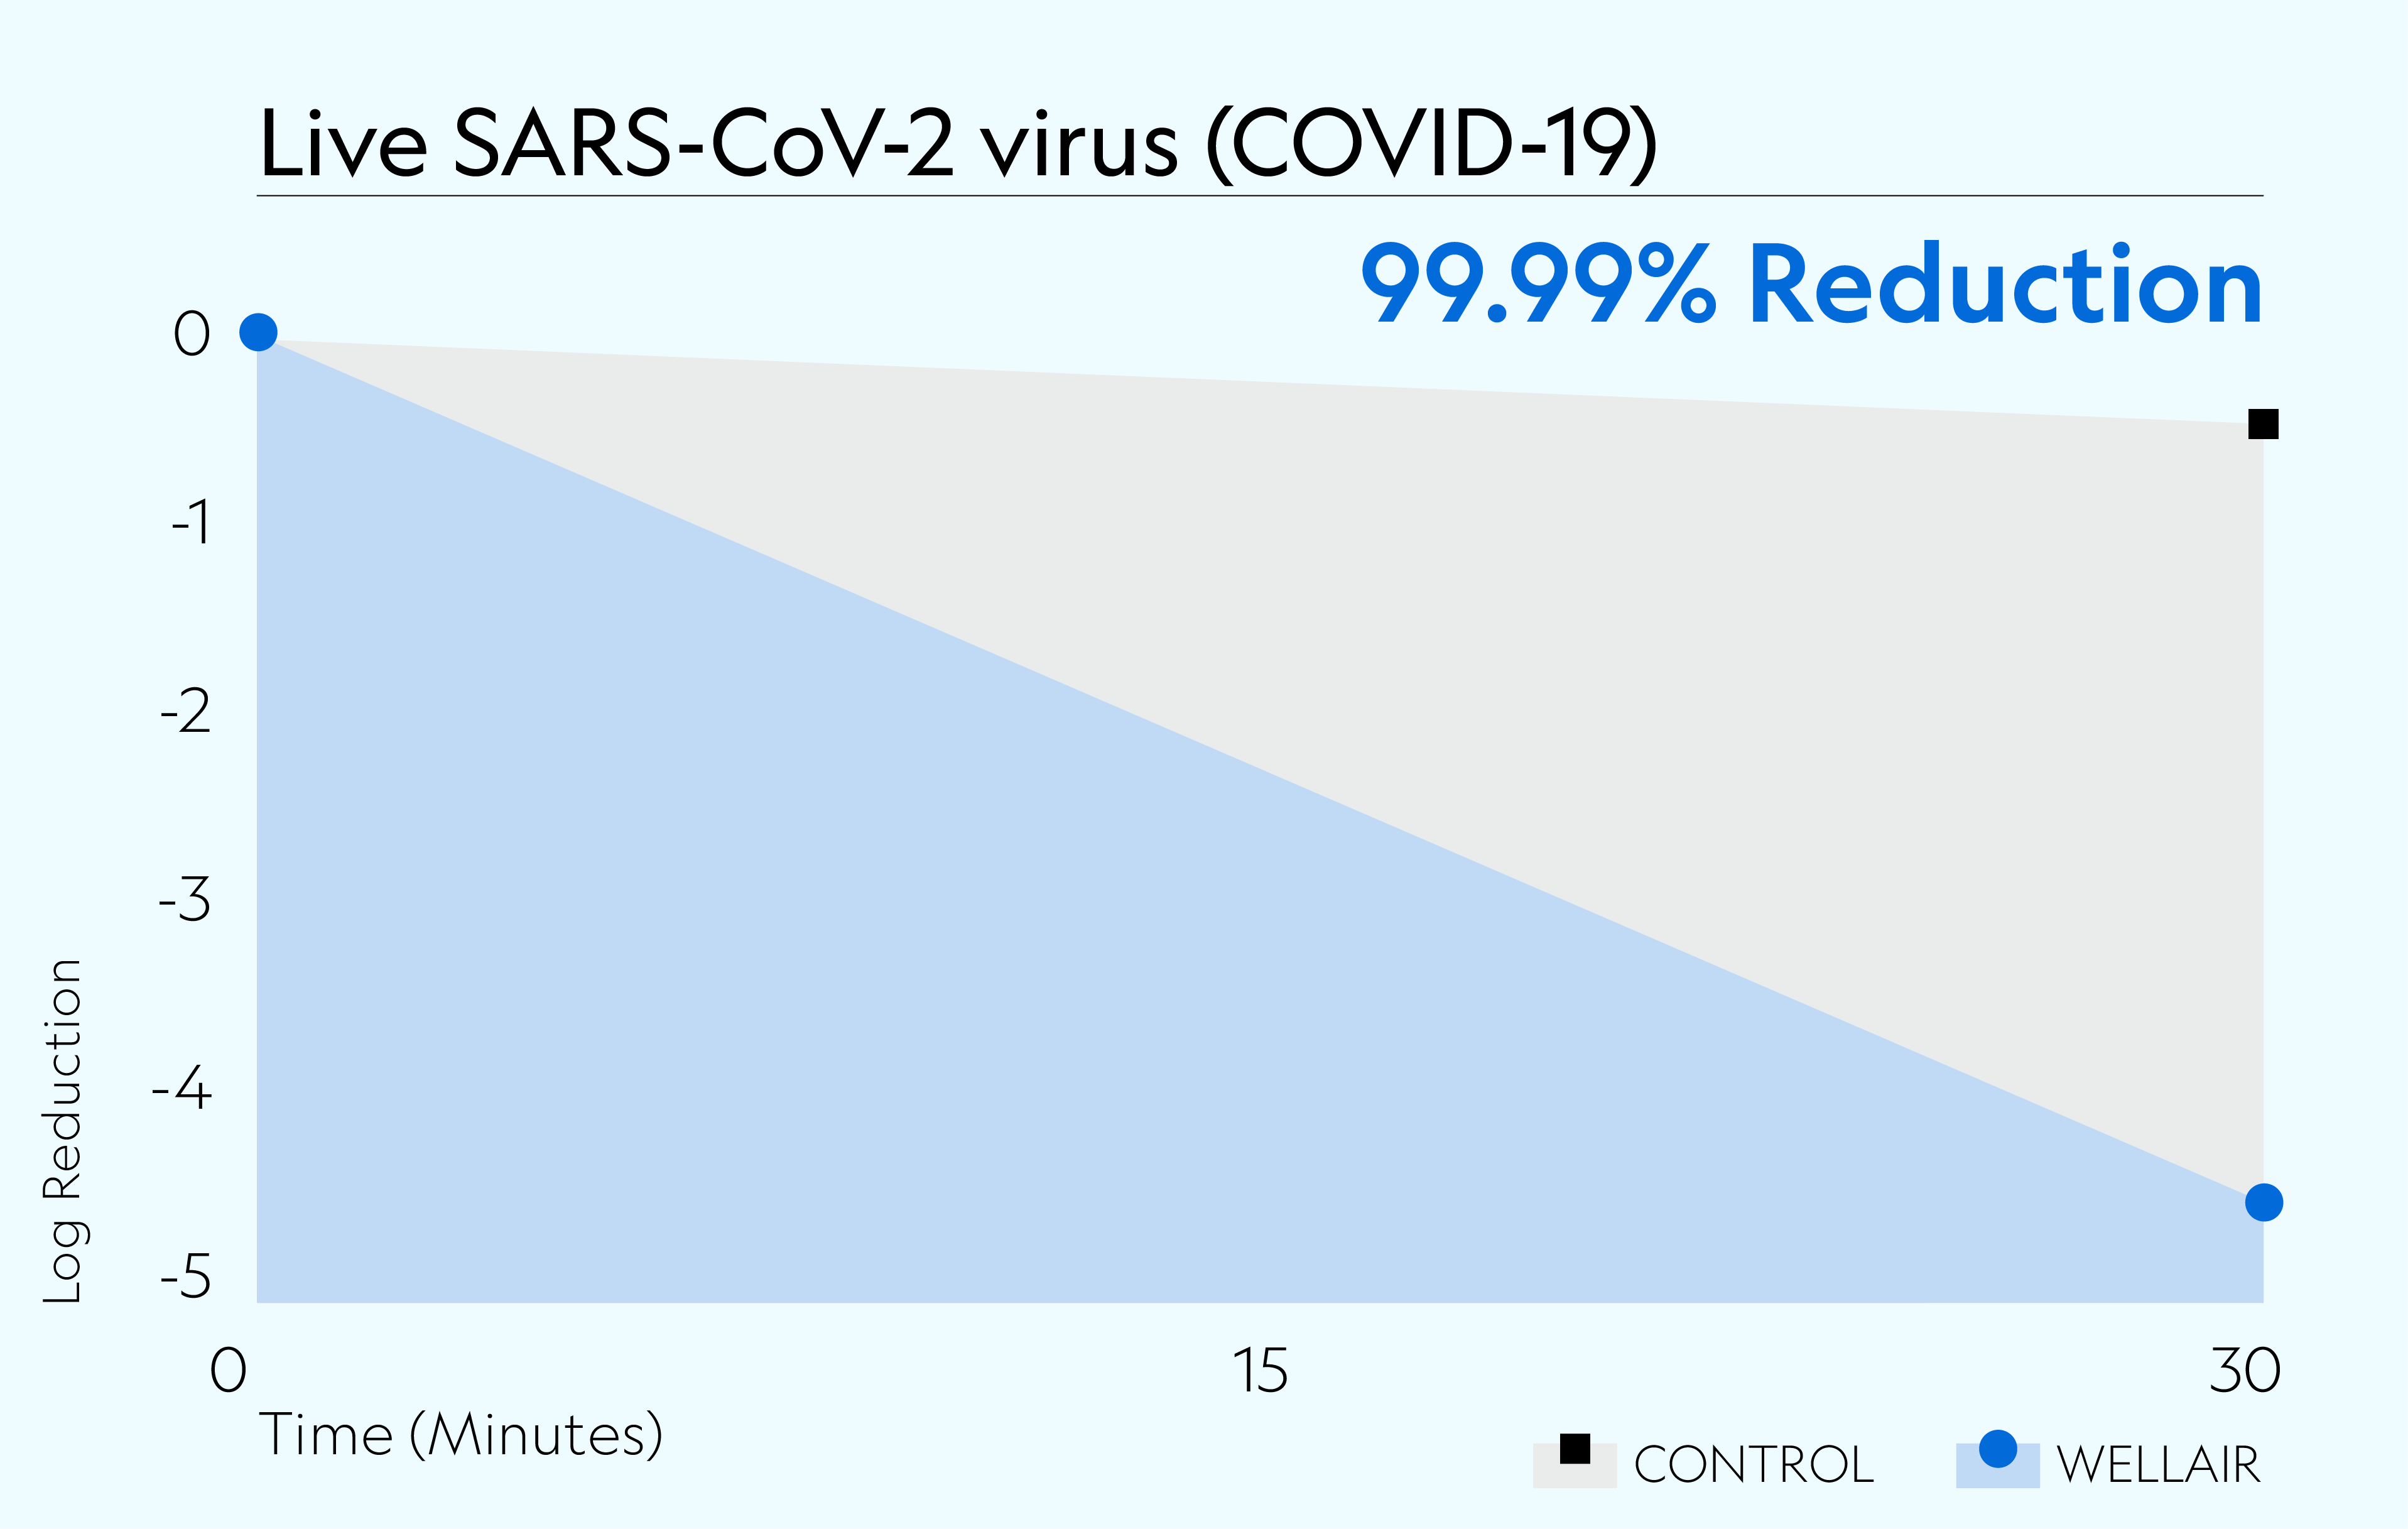 Defend 1050 achieved 99.99% reduction of live SARS-CoV-2